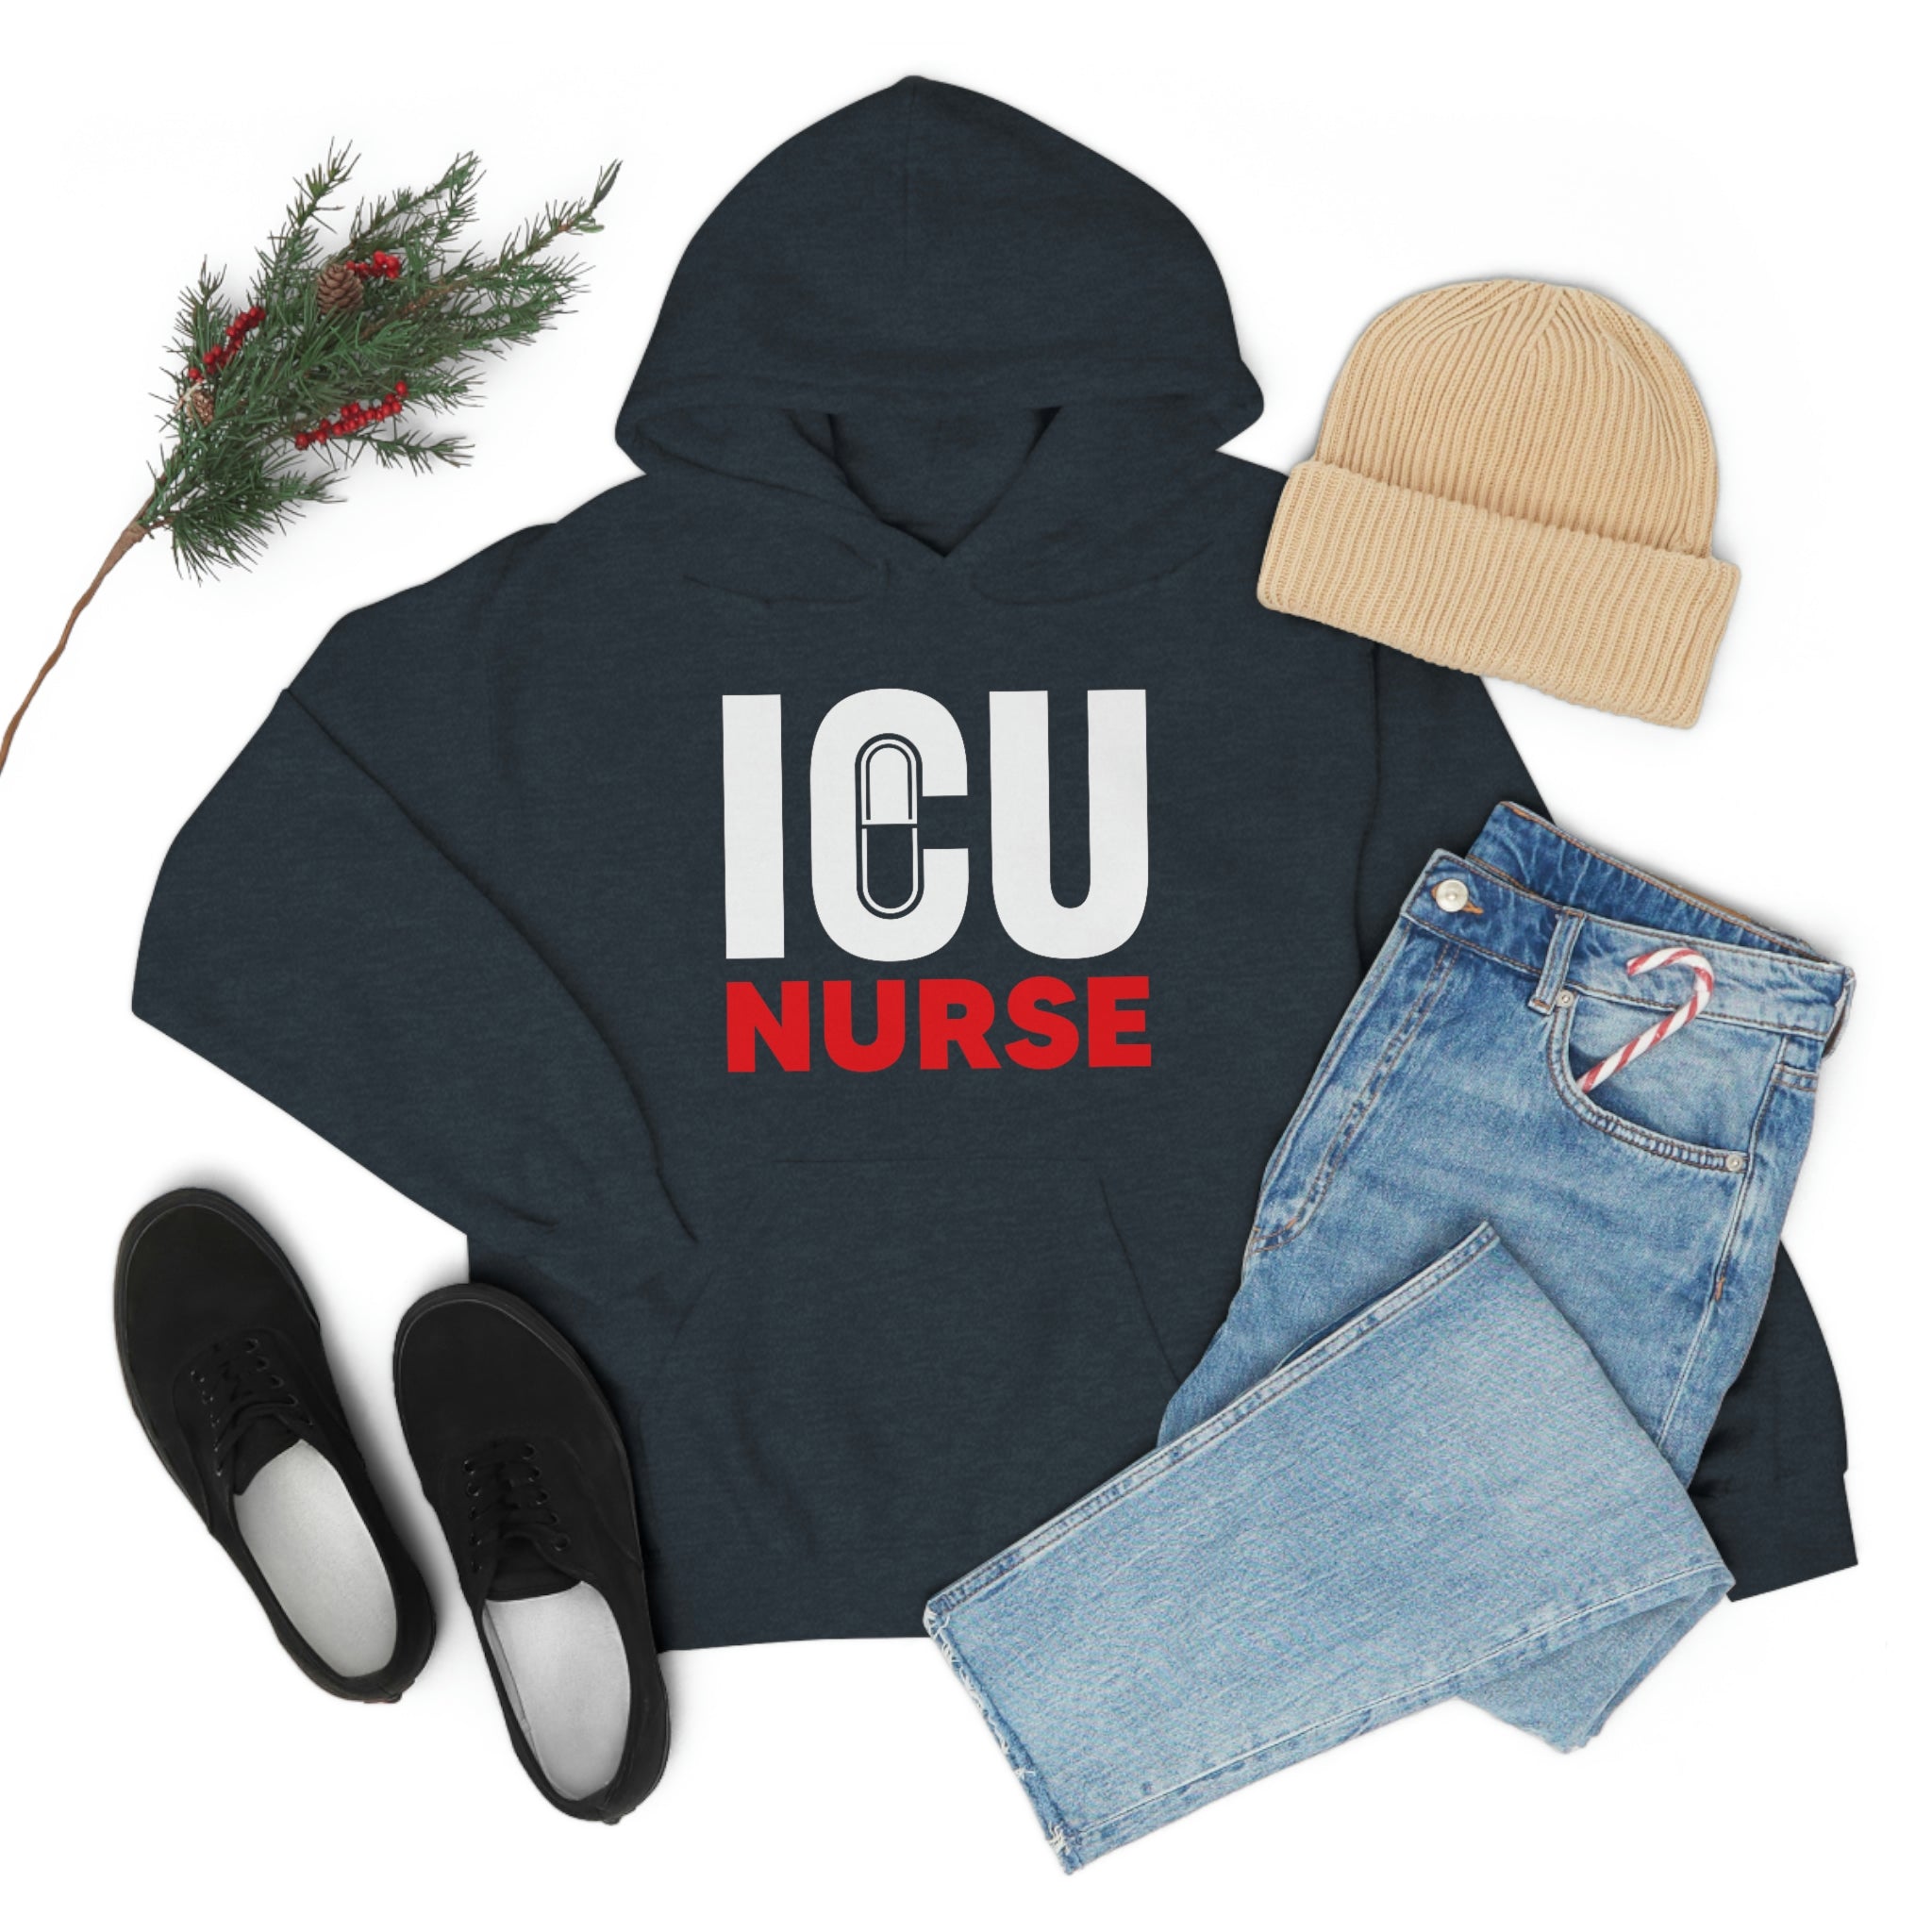 ICU Nurse #2 (Hoodie)